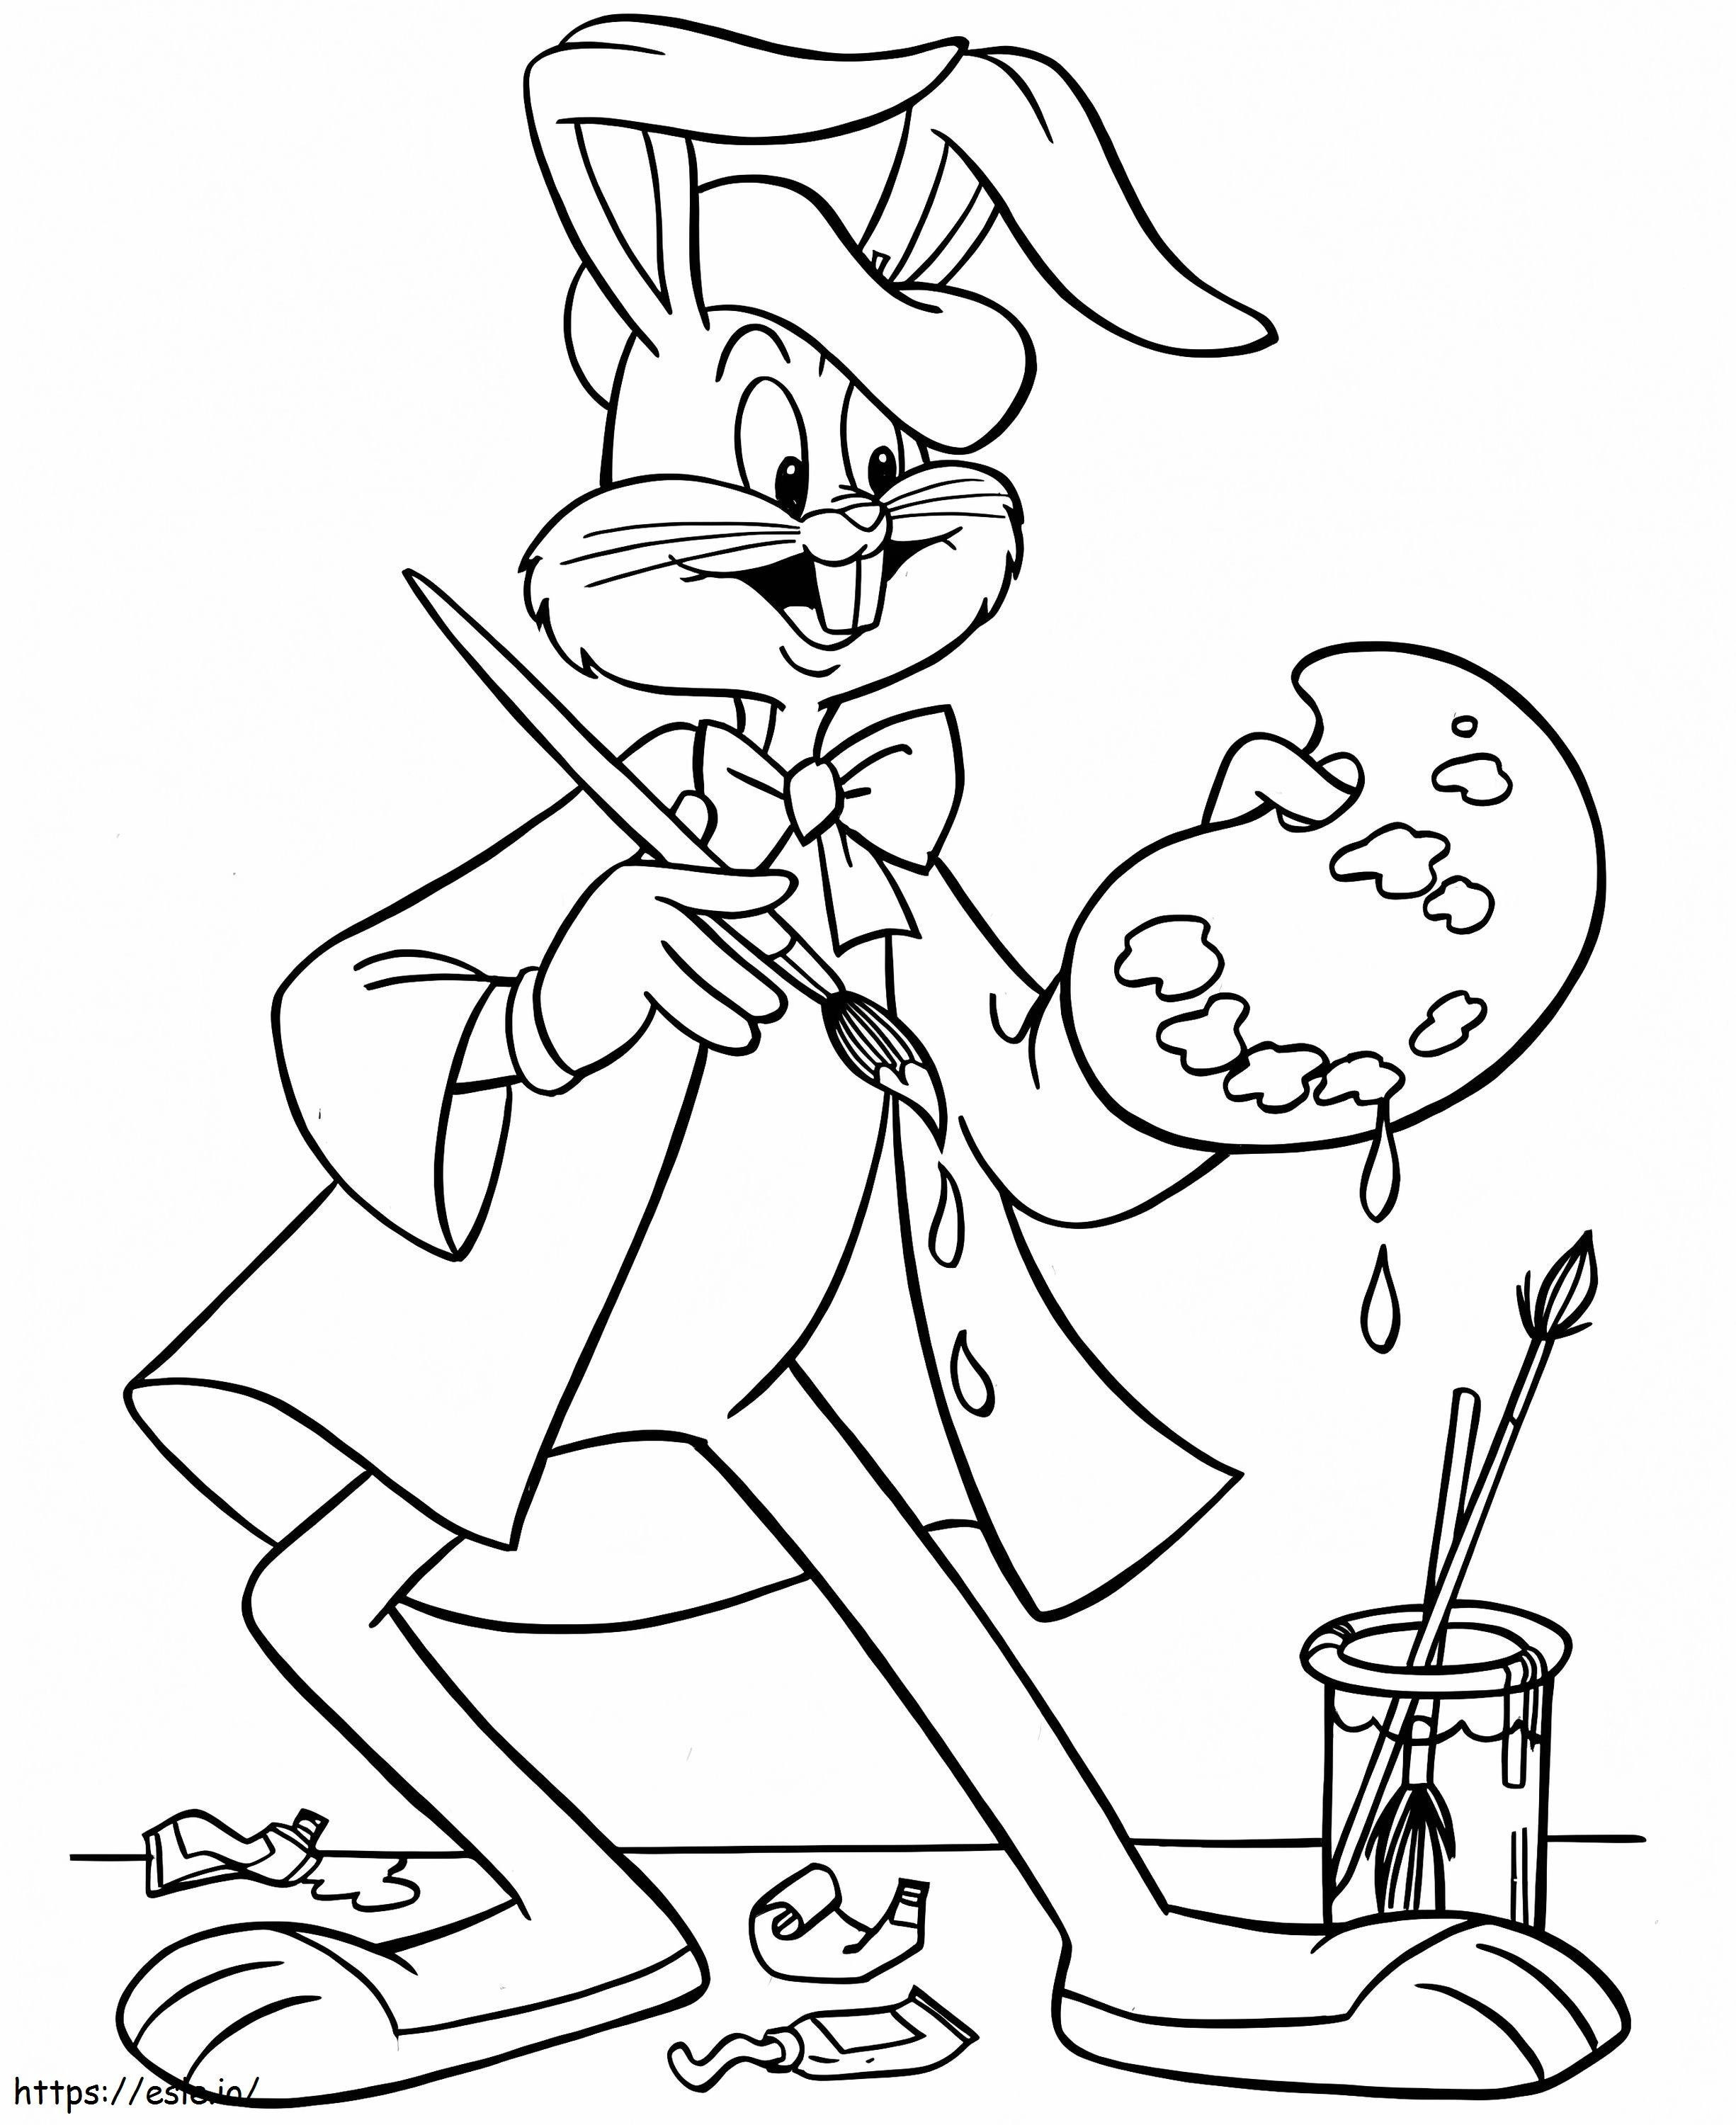 Ausmalbilder Bugs Bunny ausmalbilder